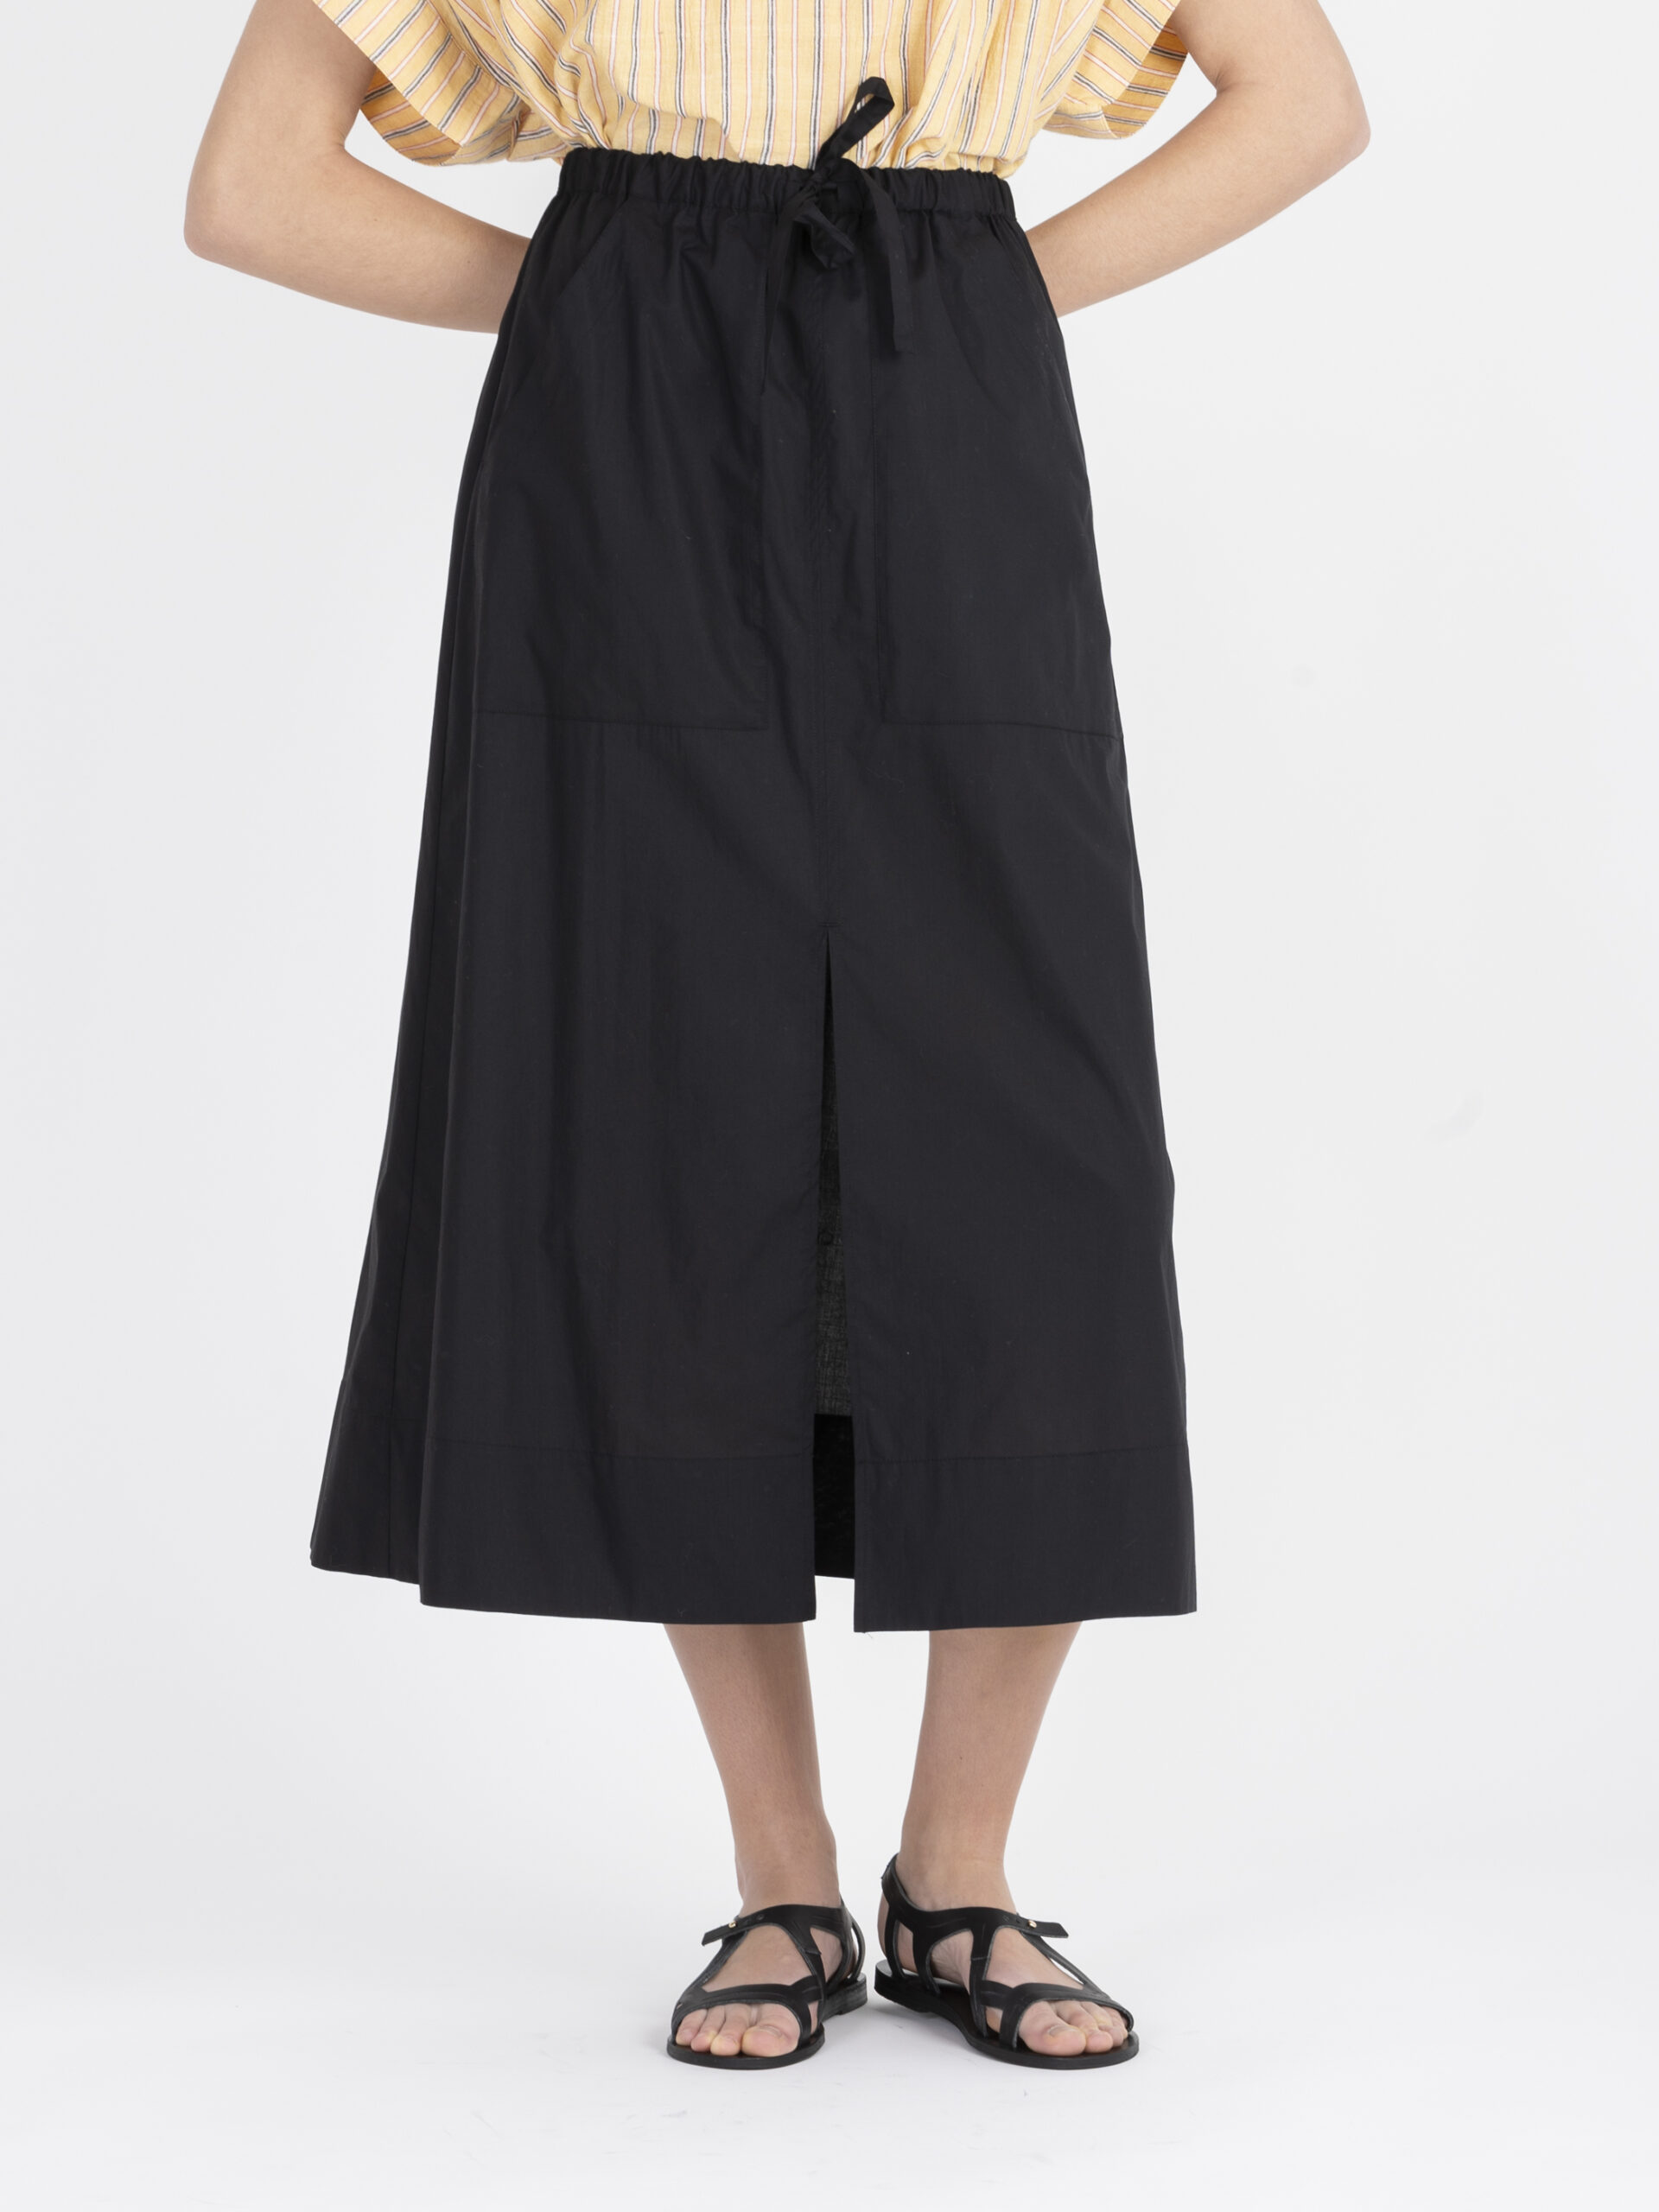 agadir-black-cotton-popline-skirt-maxi-slit-elastic-band-soeur-matchboxathens